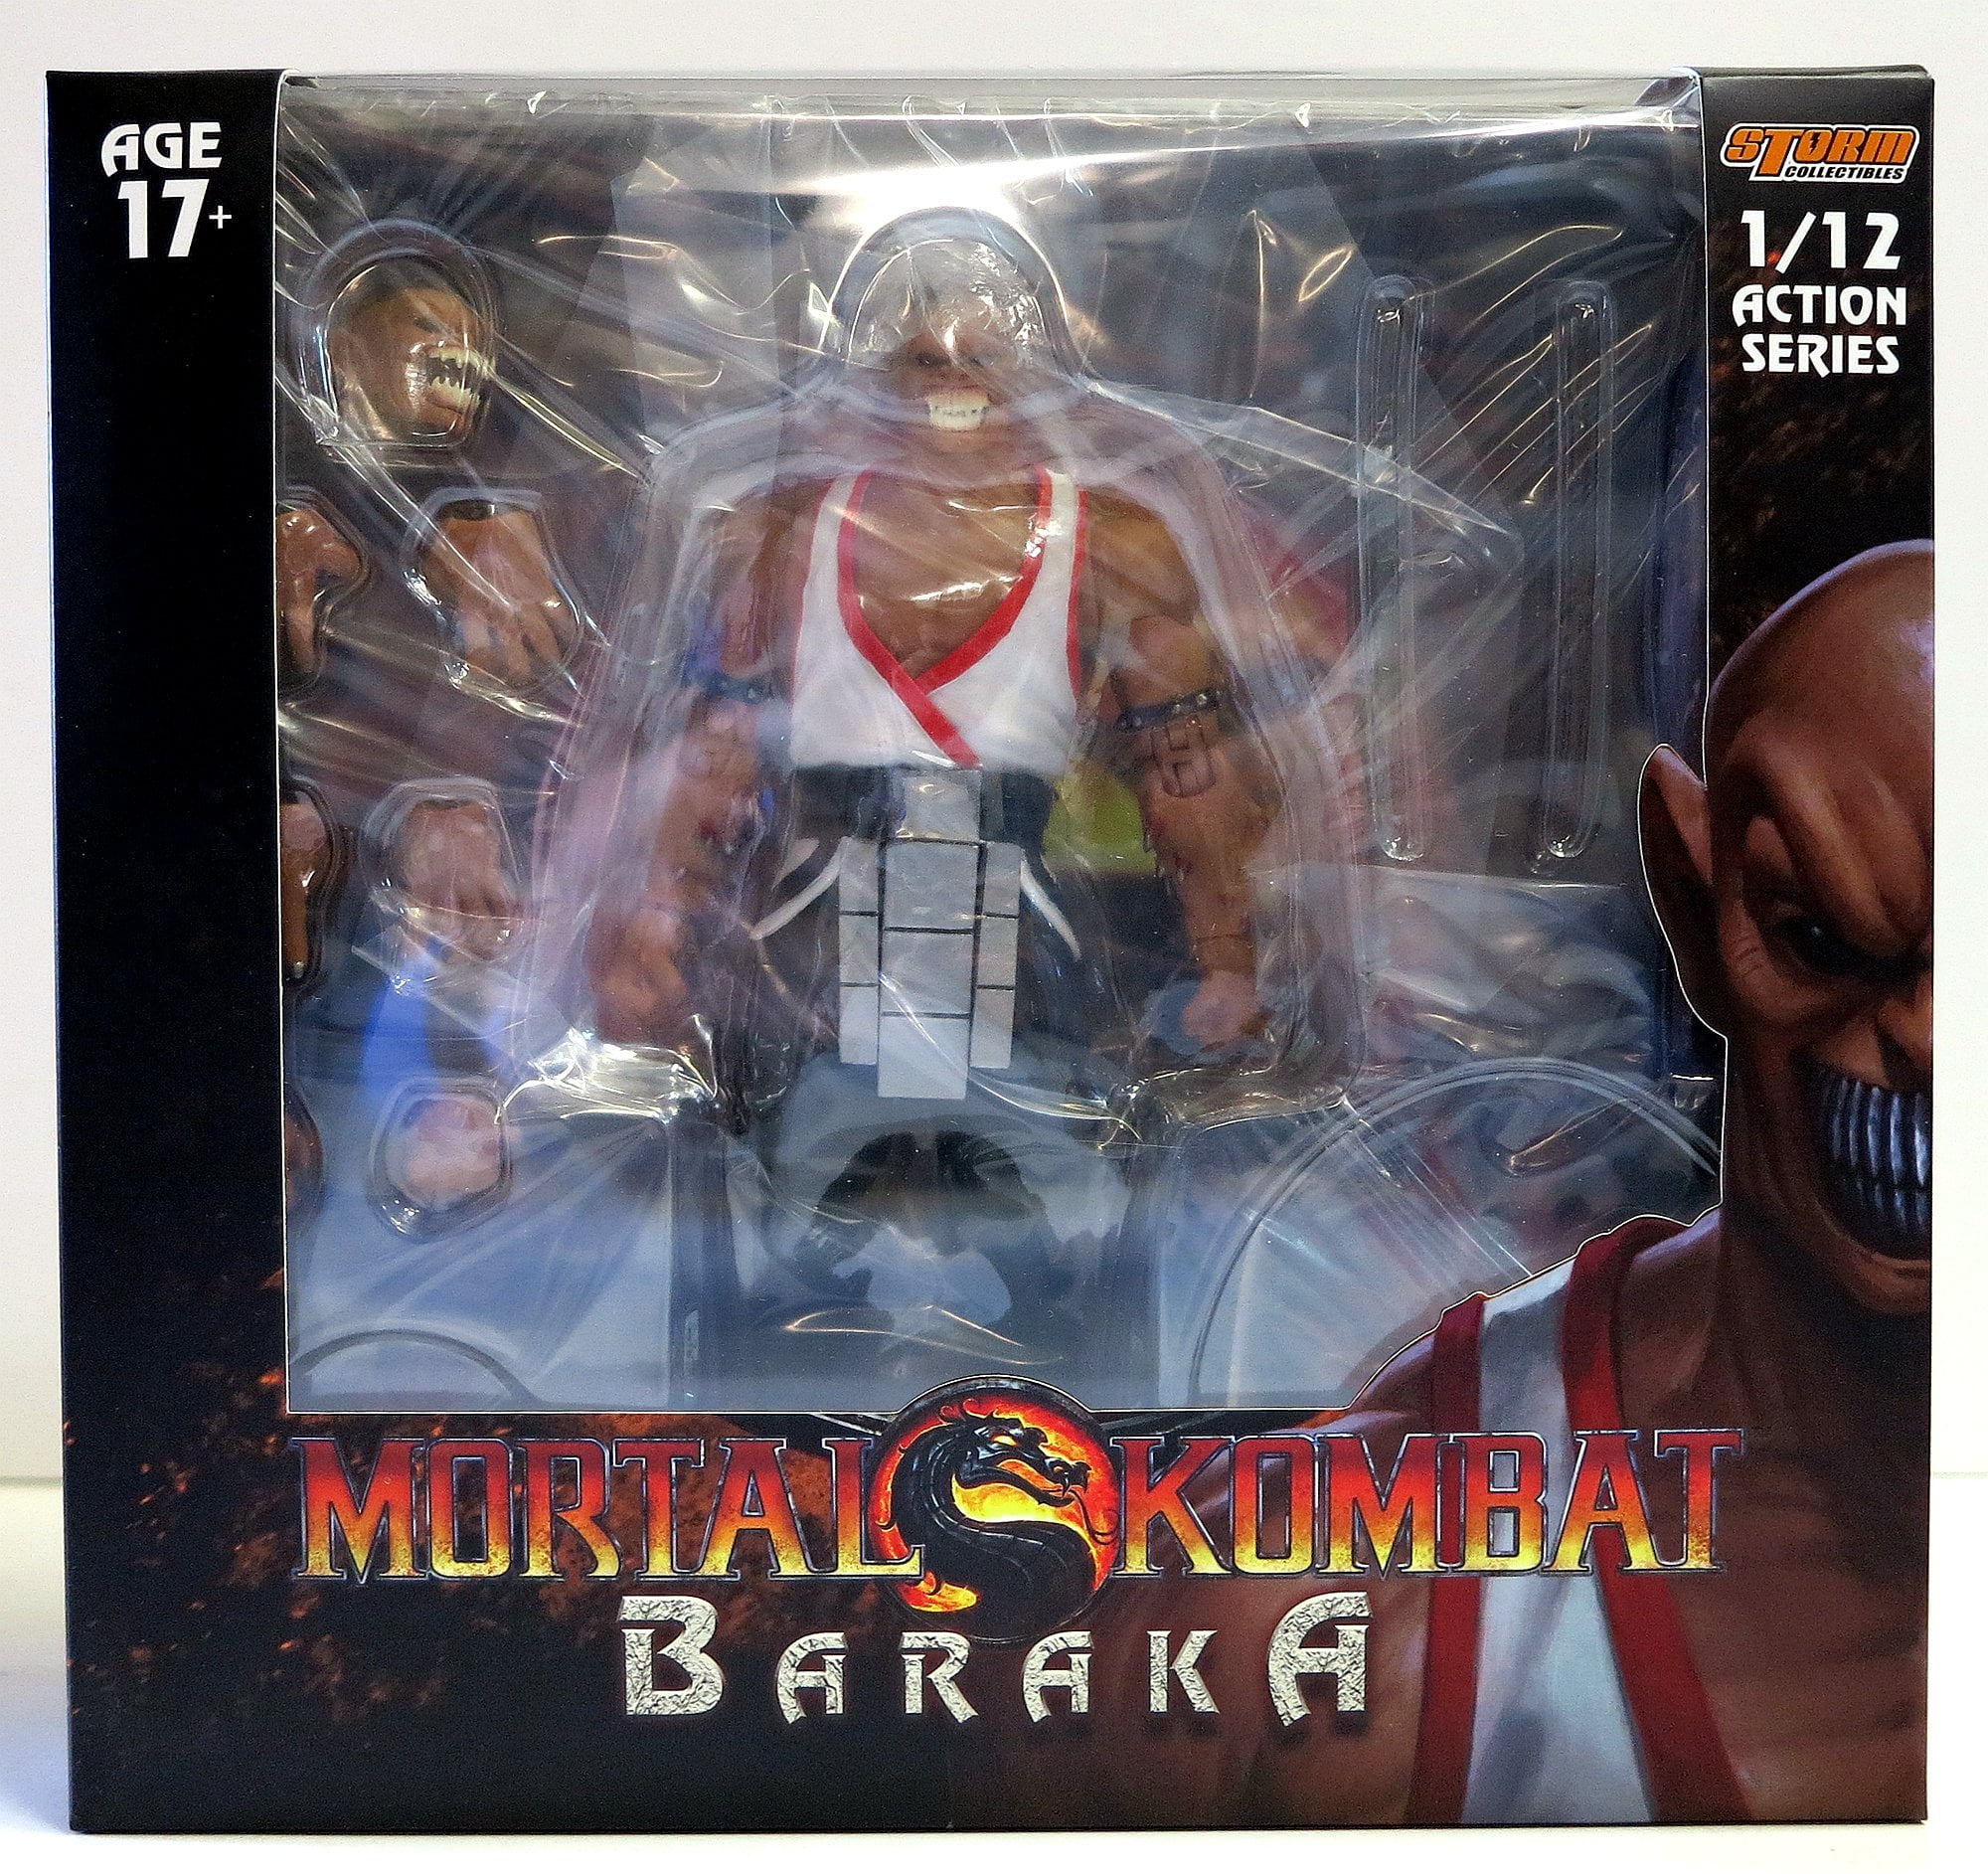 Mortal Kombat Shao Kahn 7 Action Figure Storm Collectibles - ToyWiz